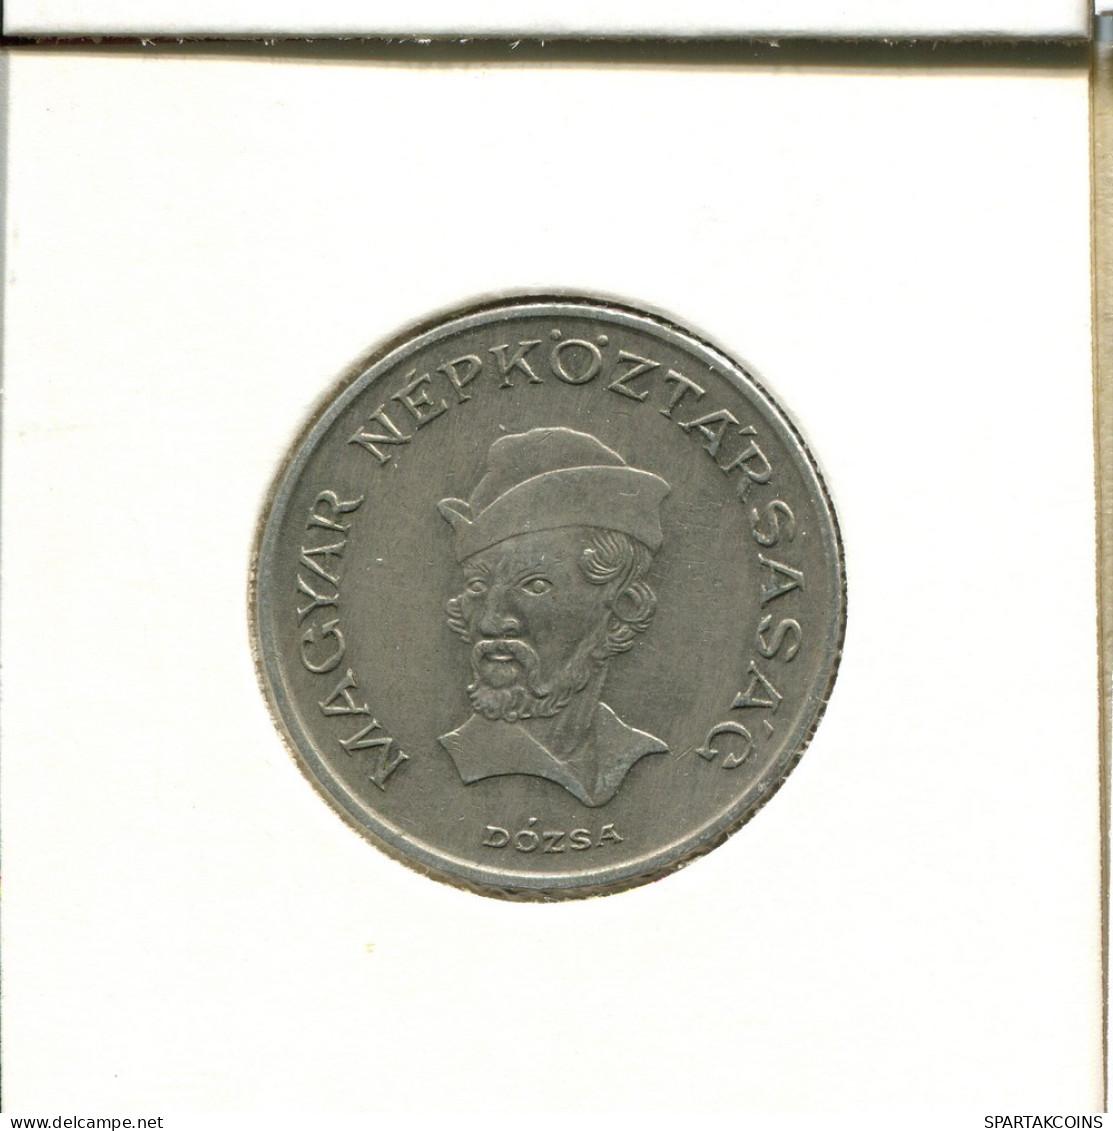 20 FORINT 1983 HUNGARY Coin #AS880.U.A - Hungary